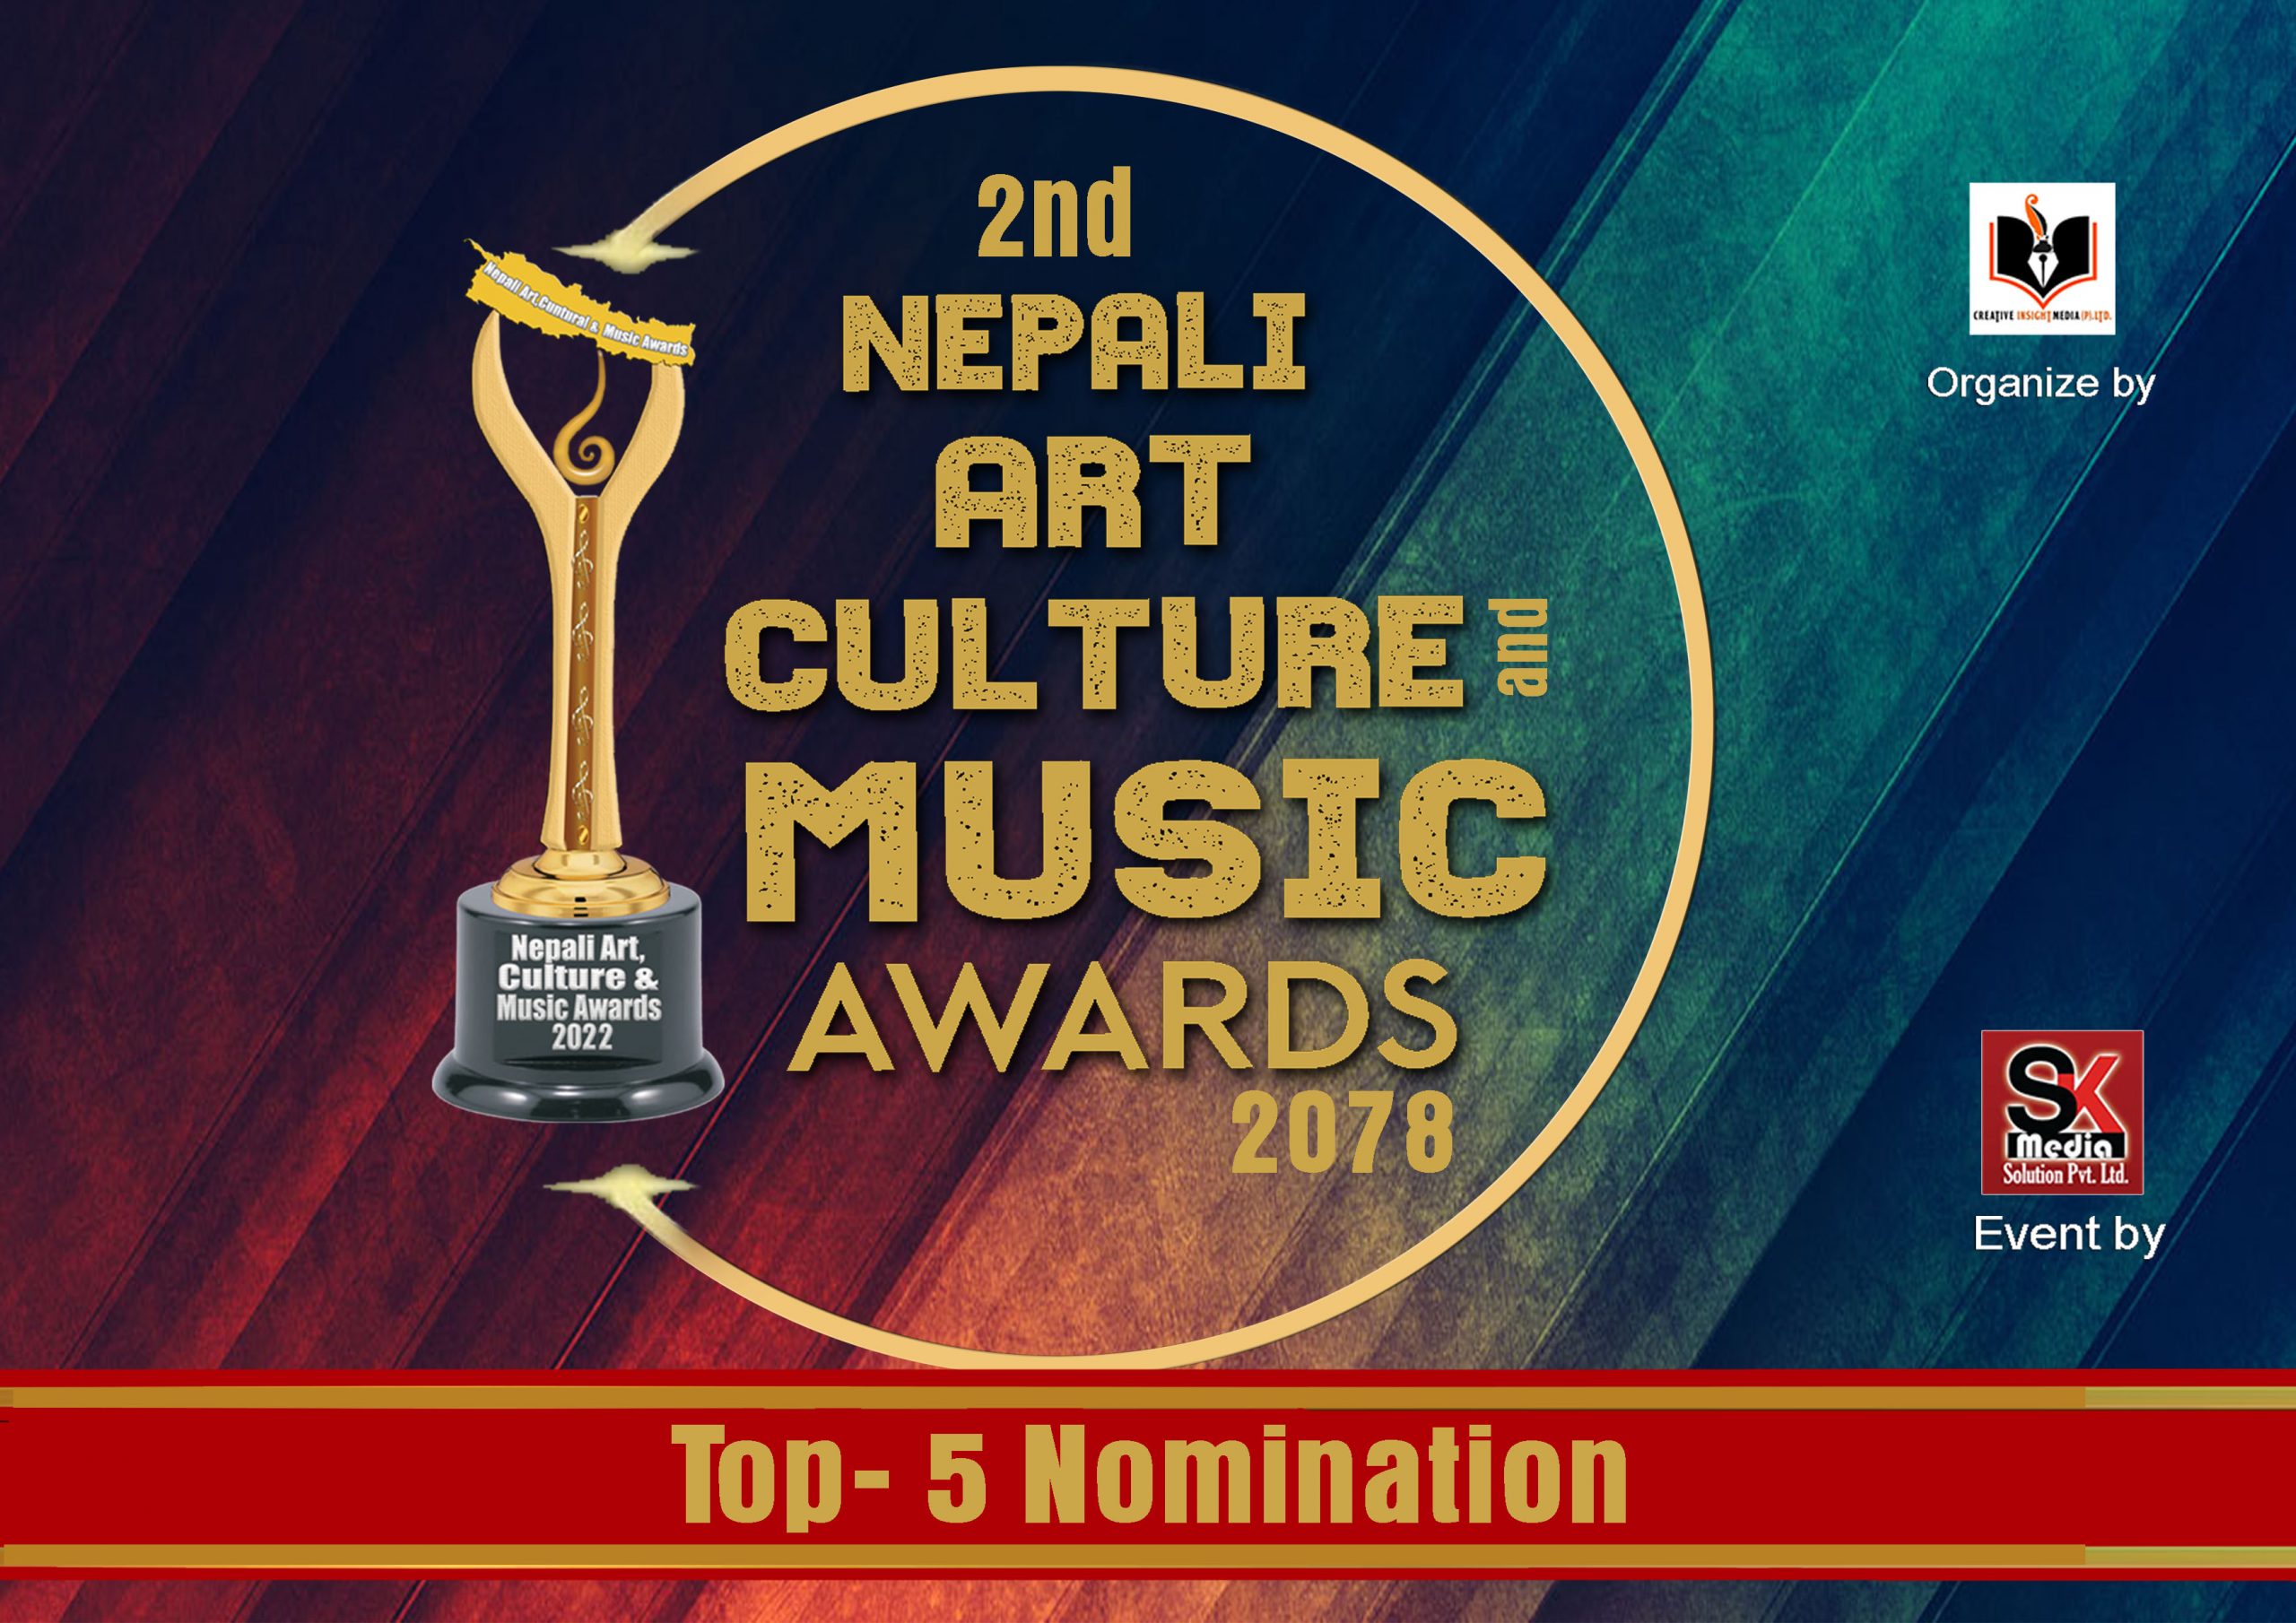 Nepali Art, Culture & Music Awards 2078